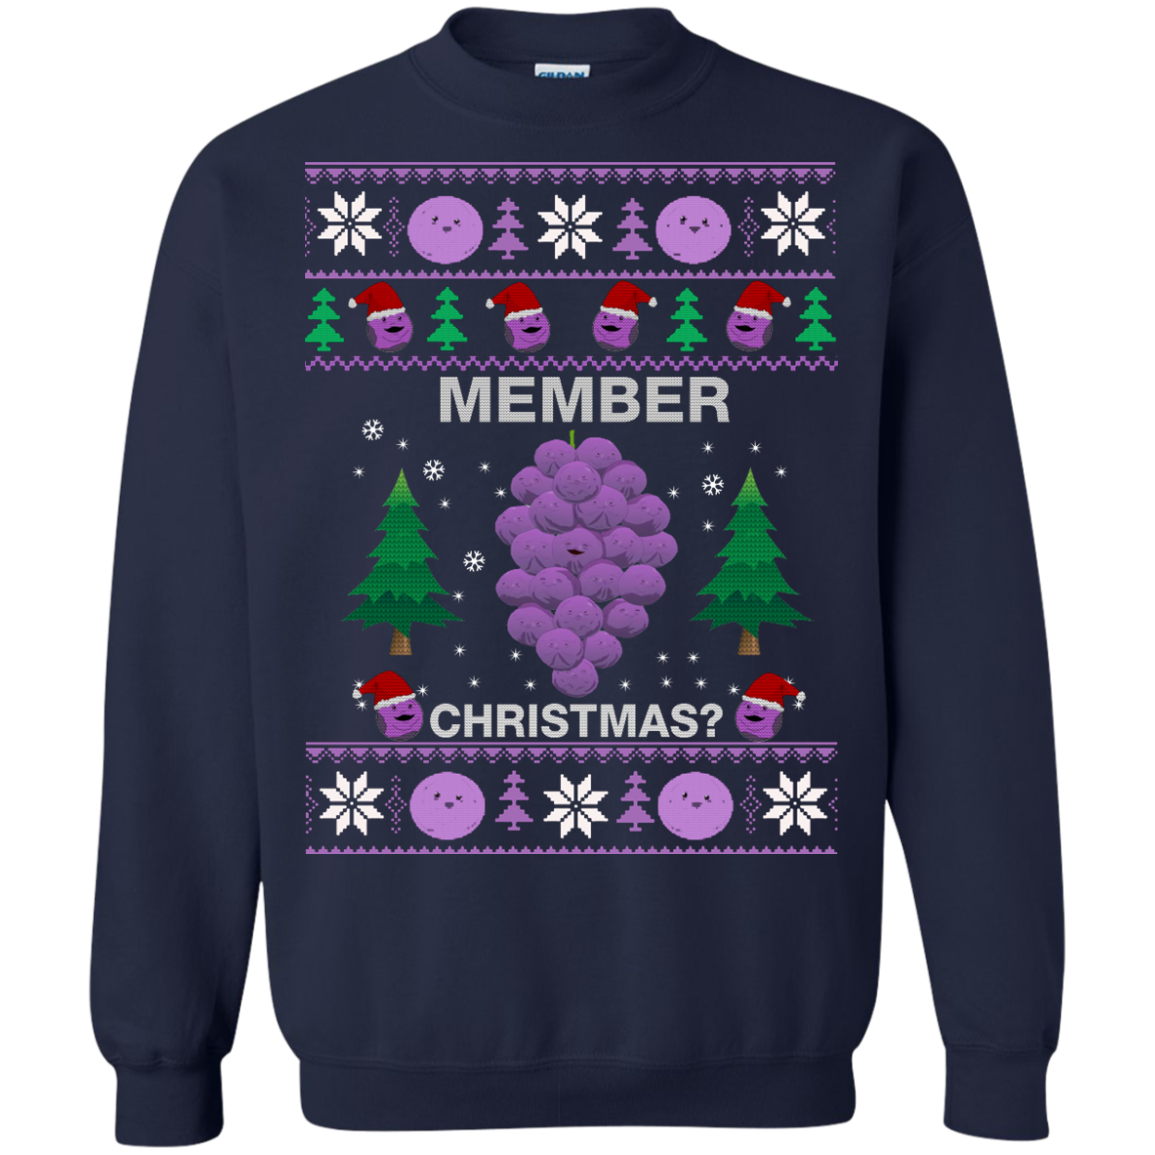 Member Berries Sweater Christmas sweatshirt, shirt